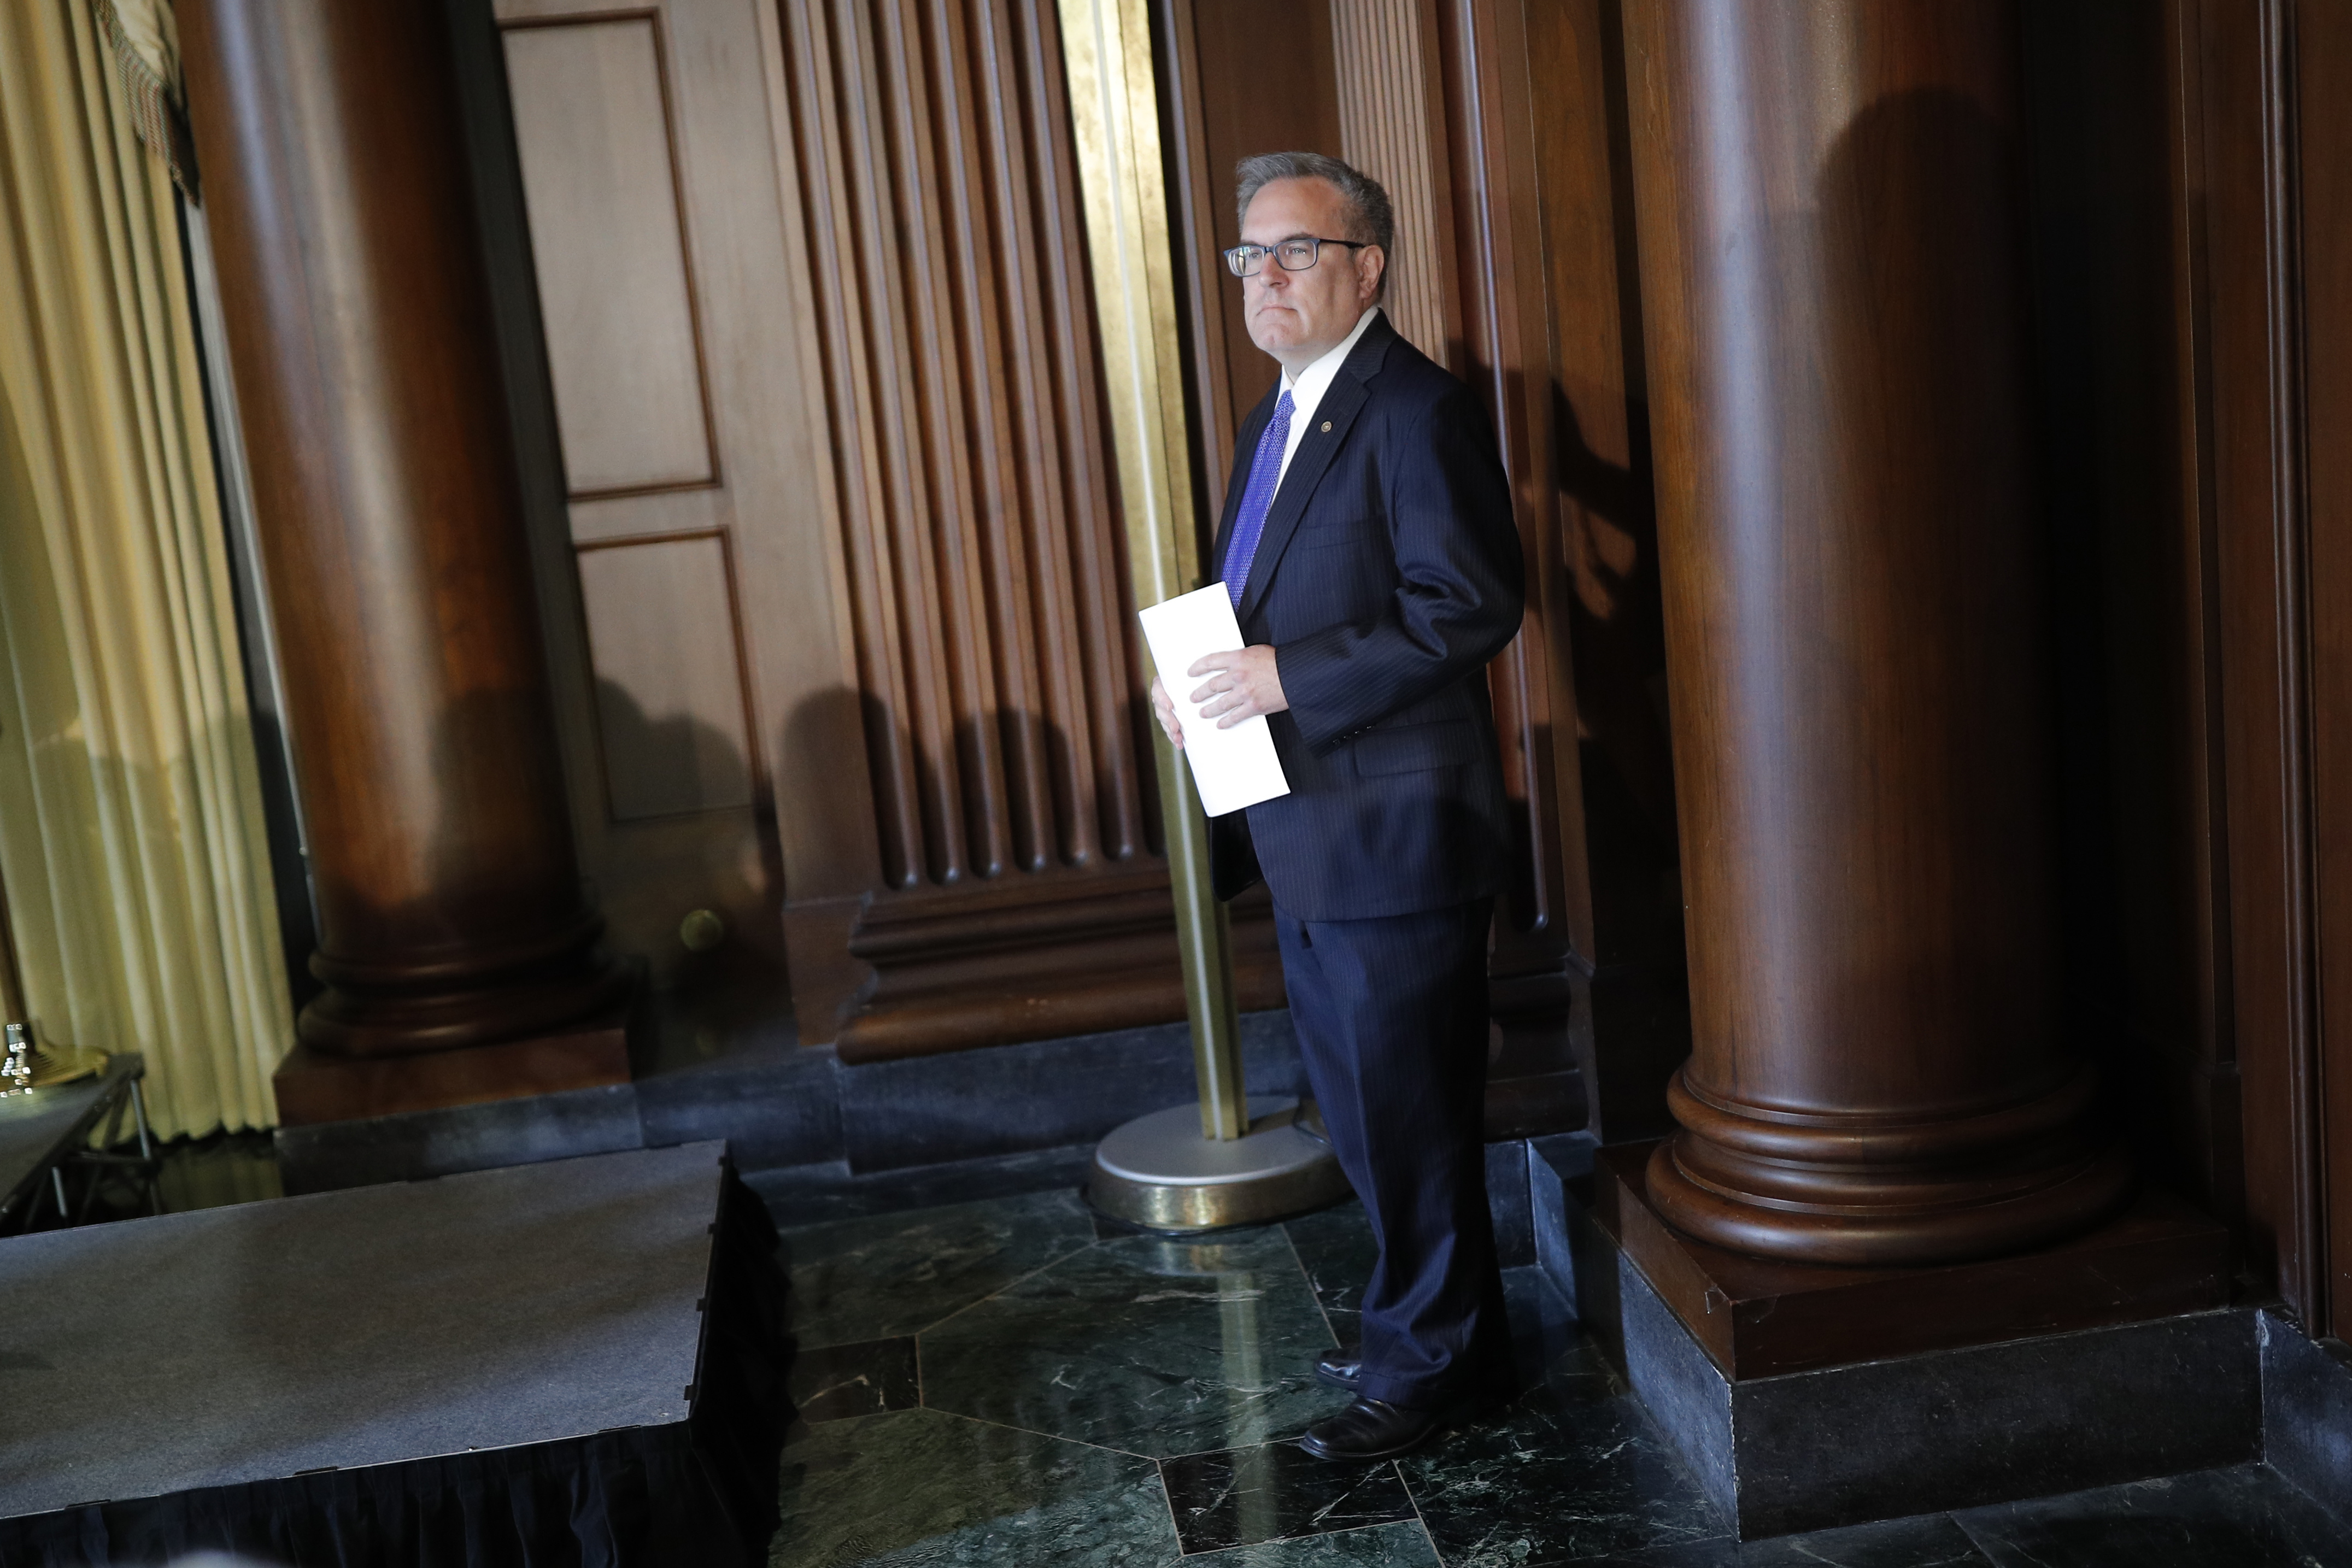 EPA Acting Administrator Wheeler waits to address staff at EPA headquarters in Washington